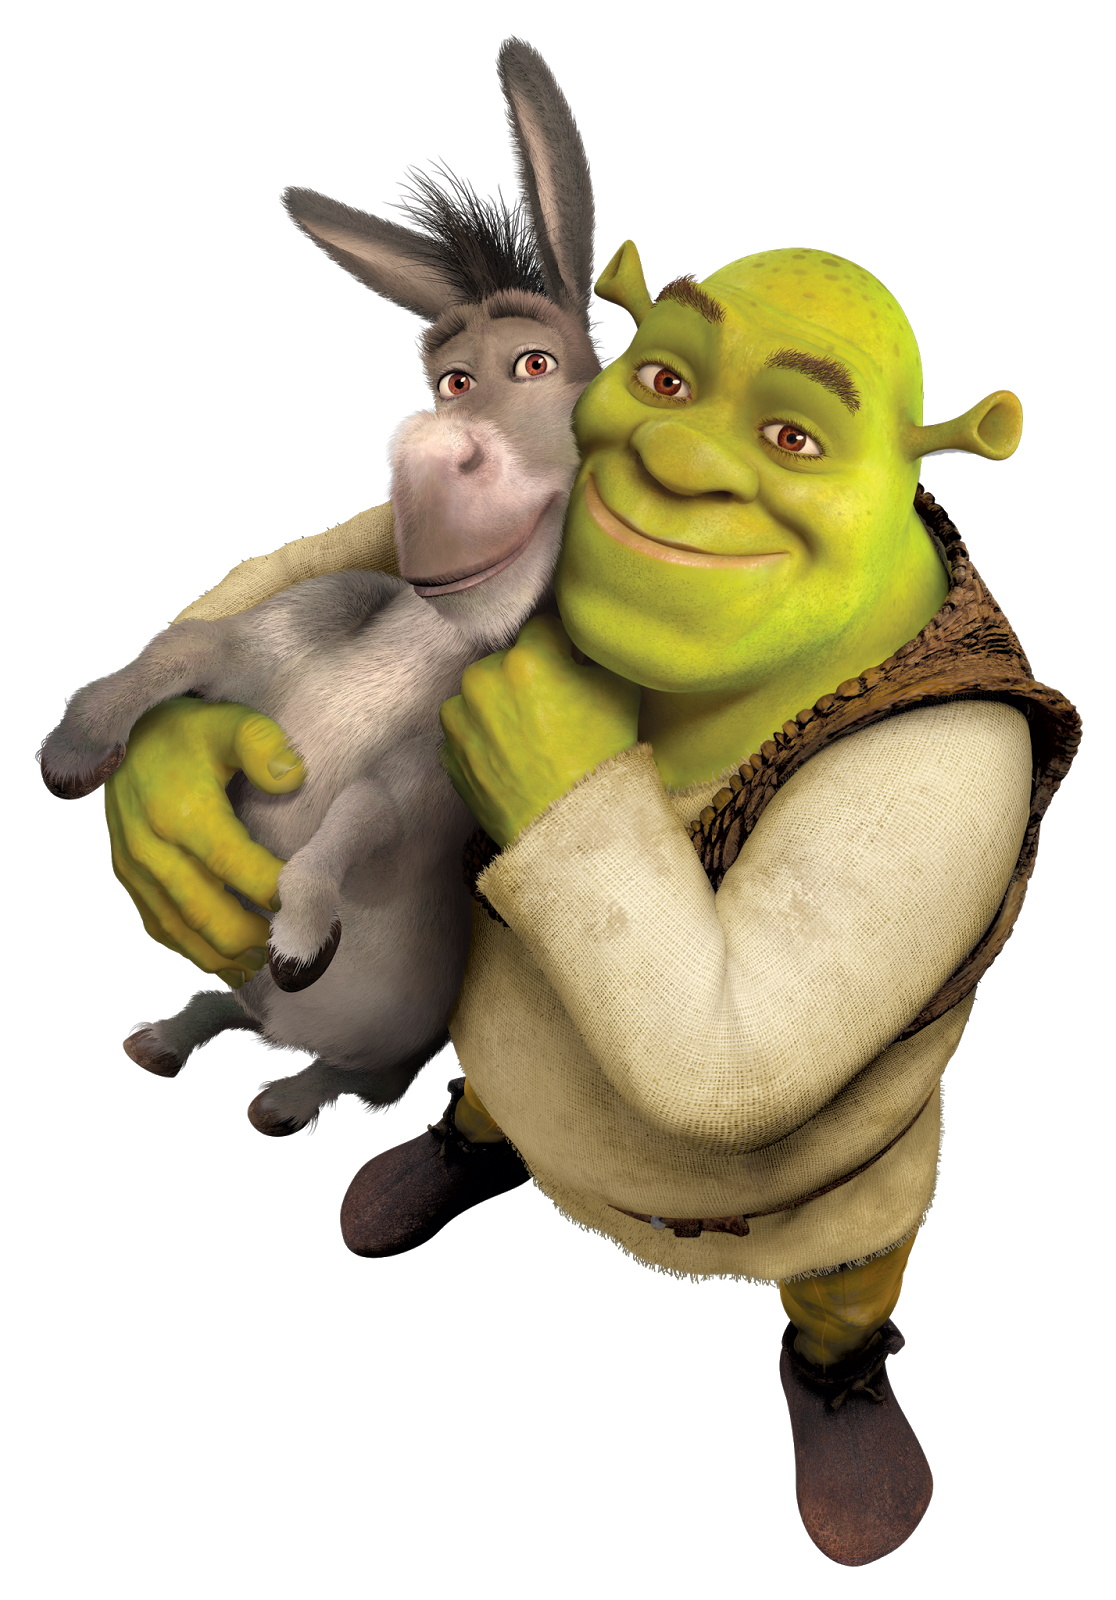 Download Shrek Donkey PNG Image for Free